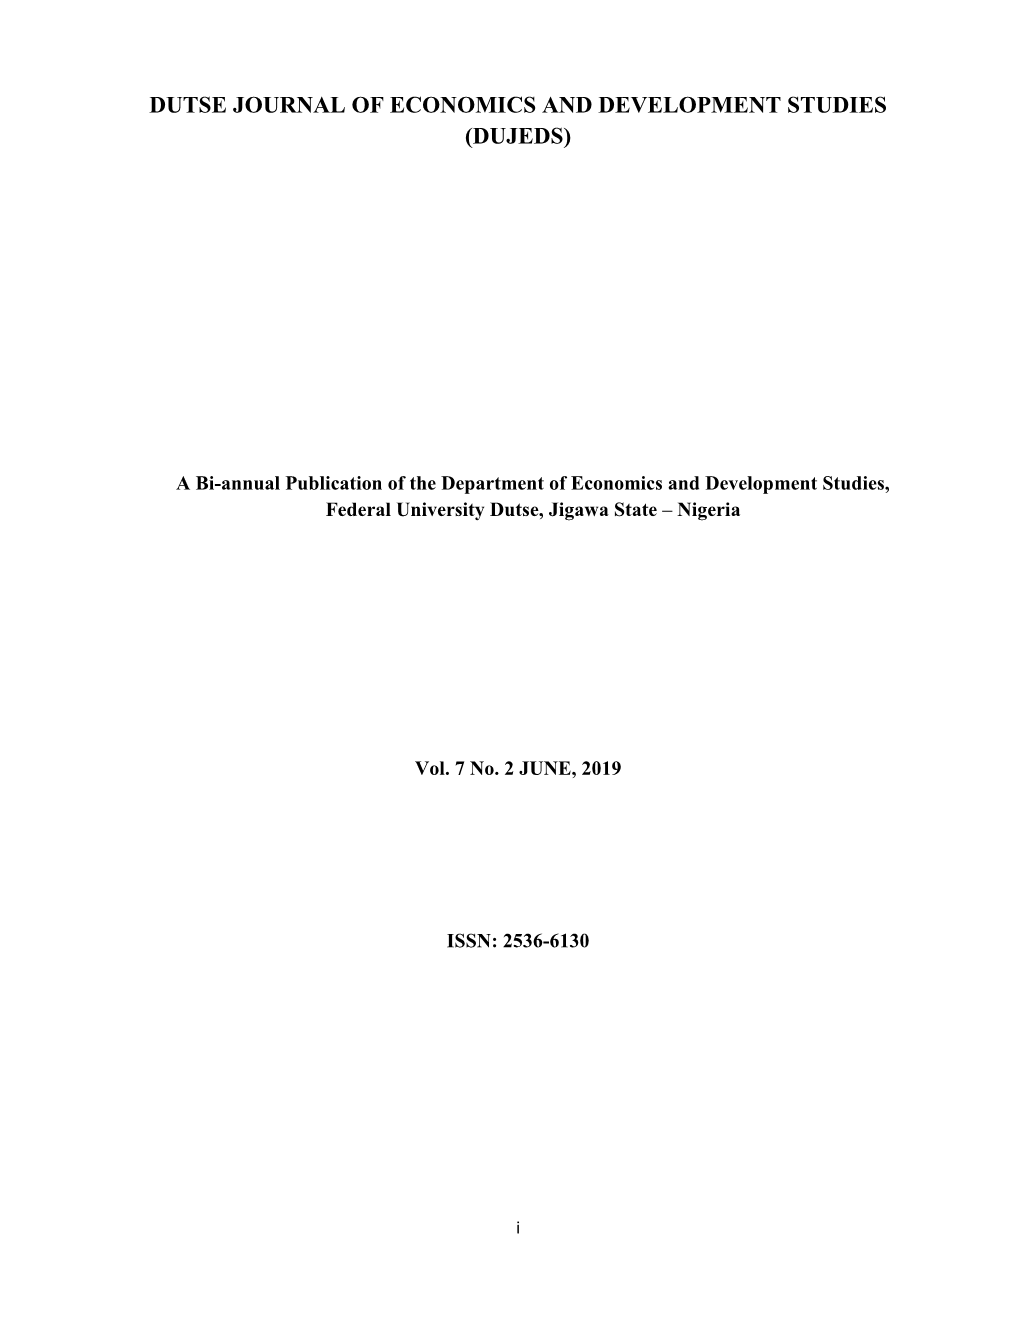 Dutse Journal of Economics and Development Studies (Dujeds)